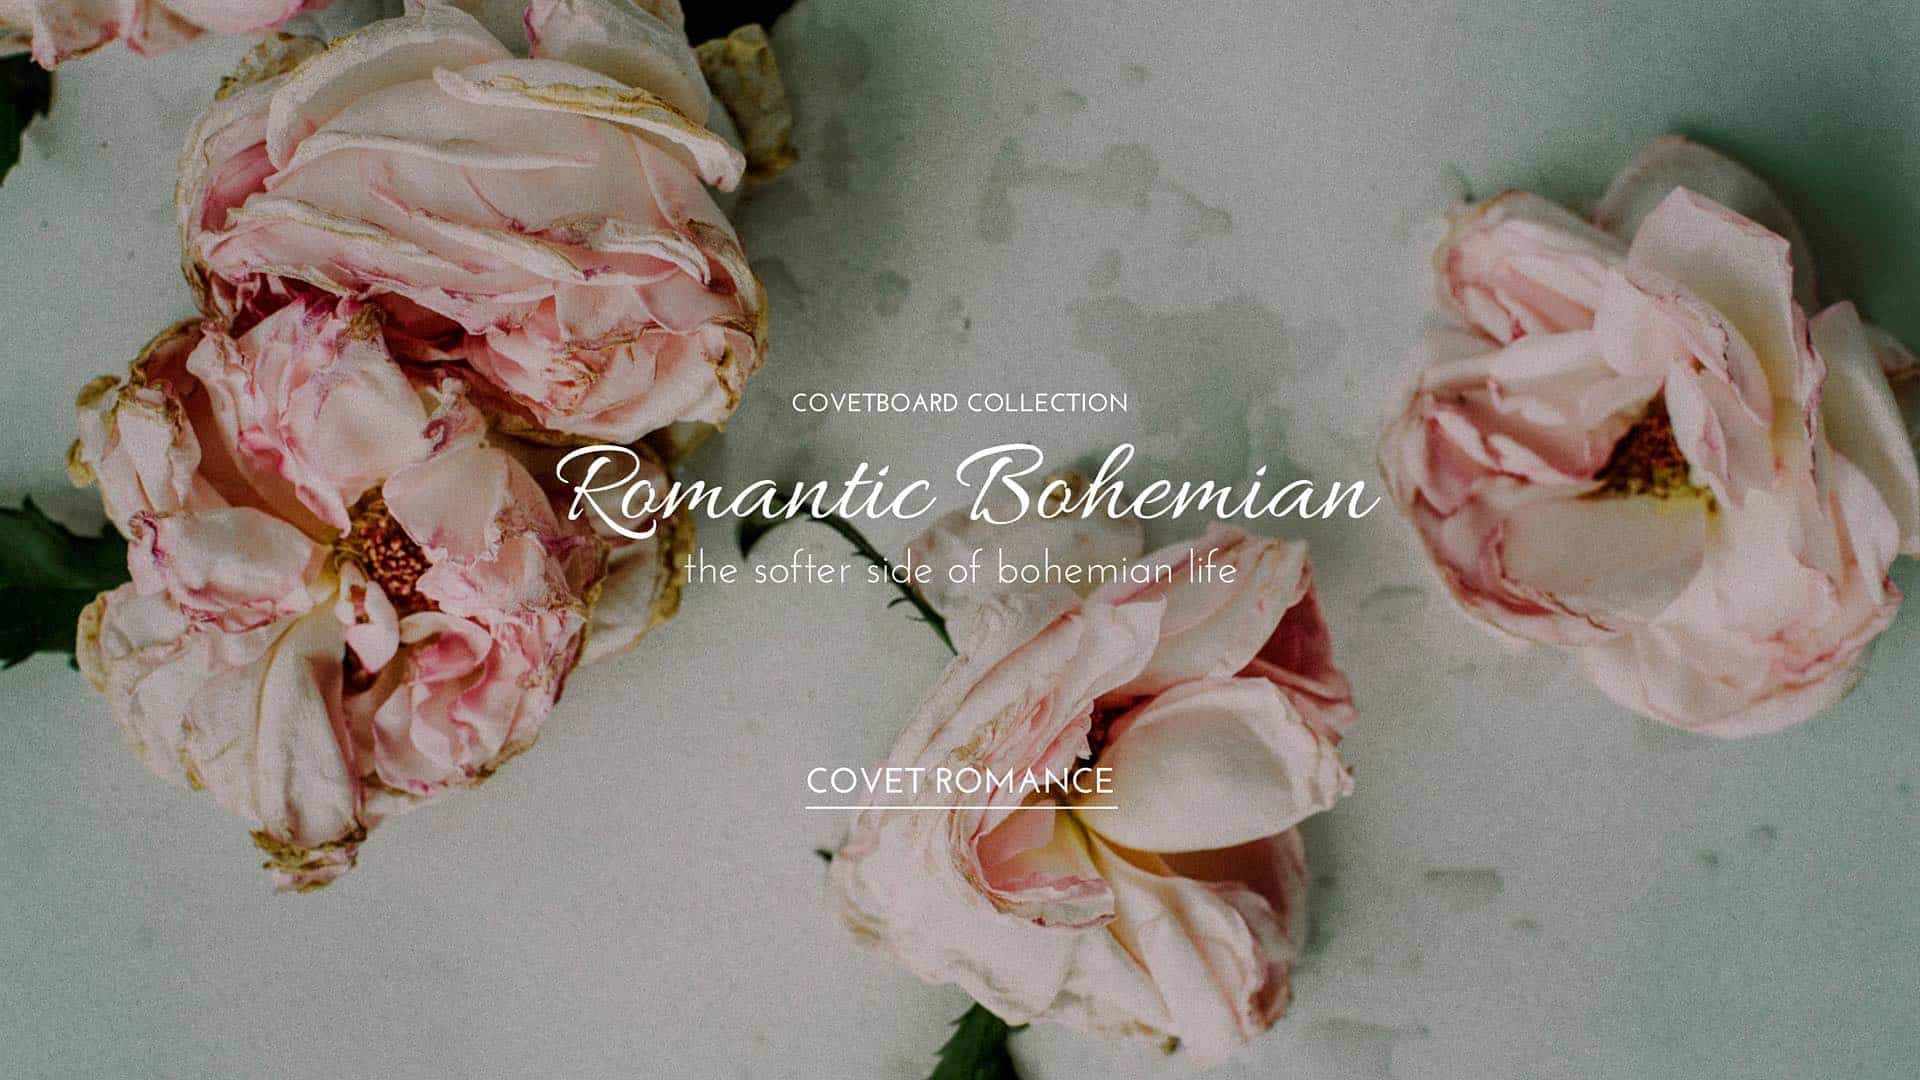 Covetboard Romantic Bohemian Collection